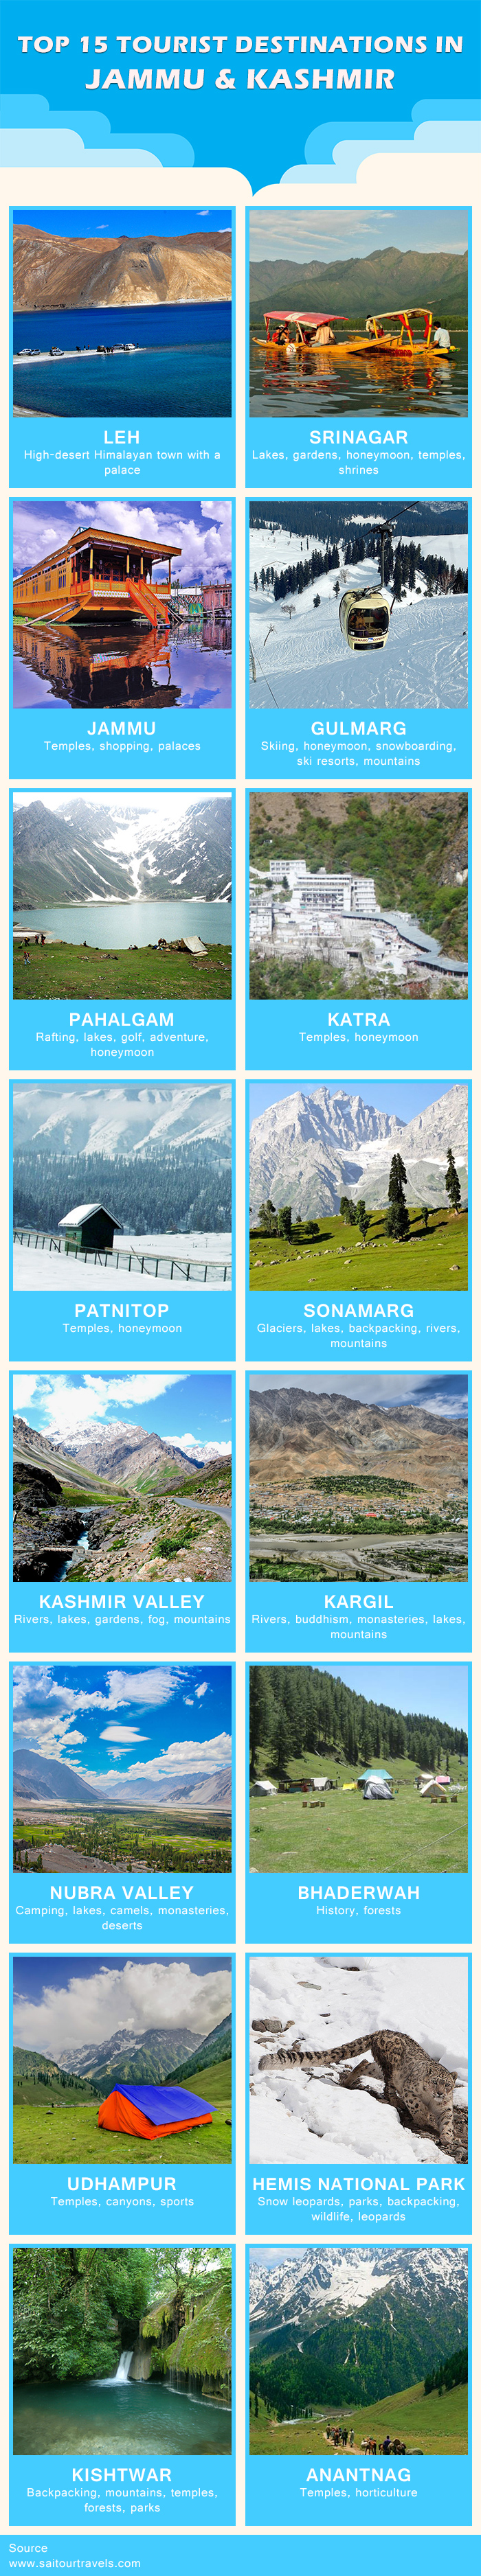 Top 15 Tourist Destinations in Jammu & Kashmir